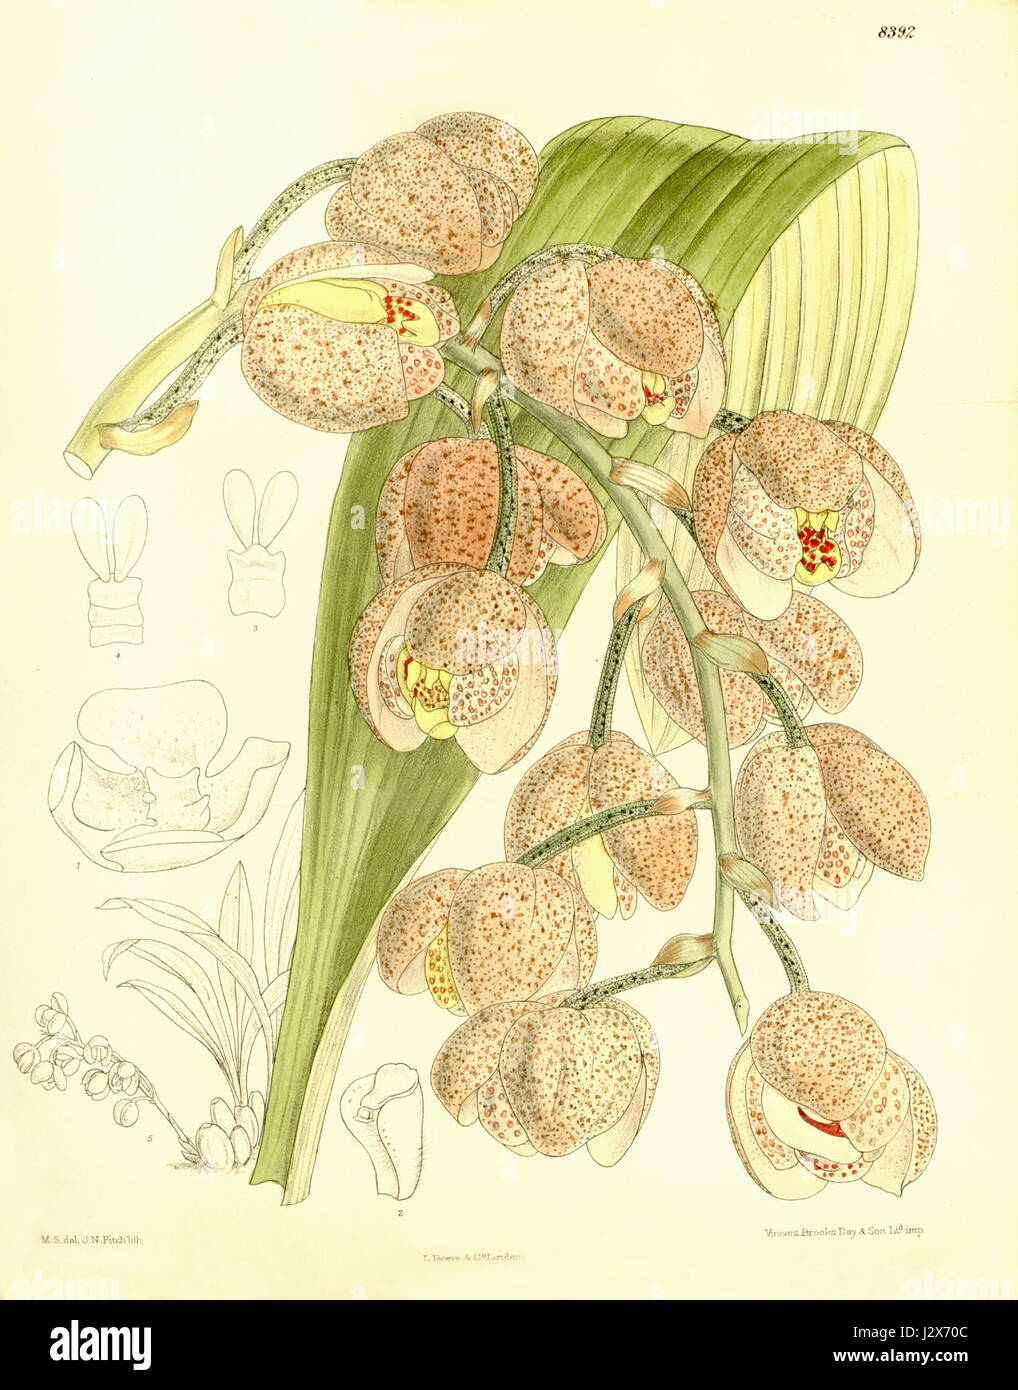 Acineta hrubyana (as Acineta moorei) - Curtis' 137 (Ser. 4 no. 7) pl. 8392 (1911) Stock Photo